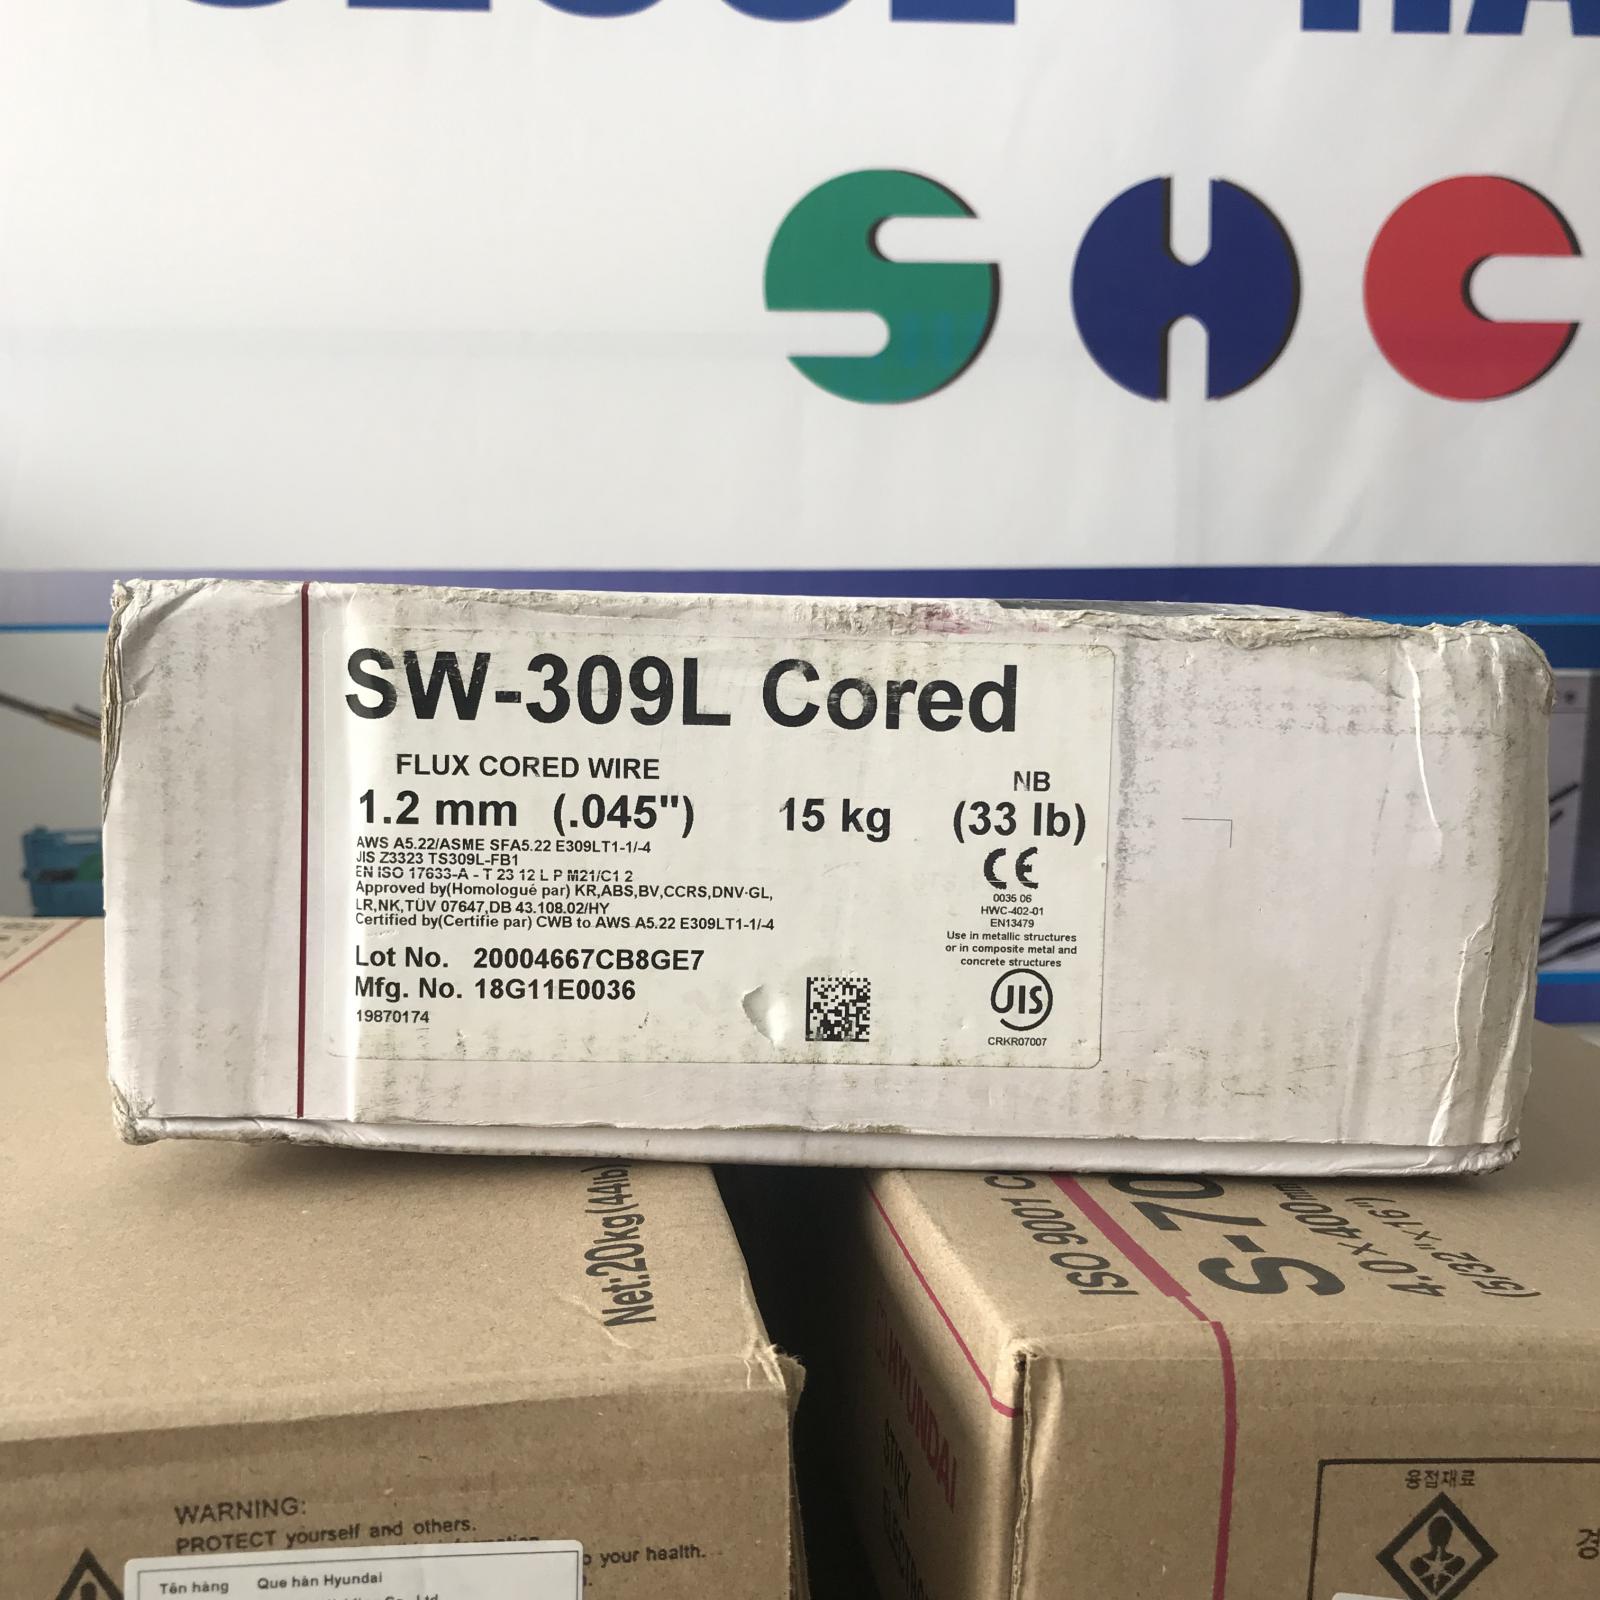 SW-309L Cored